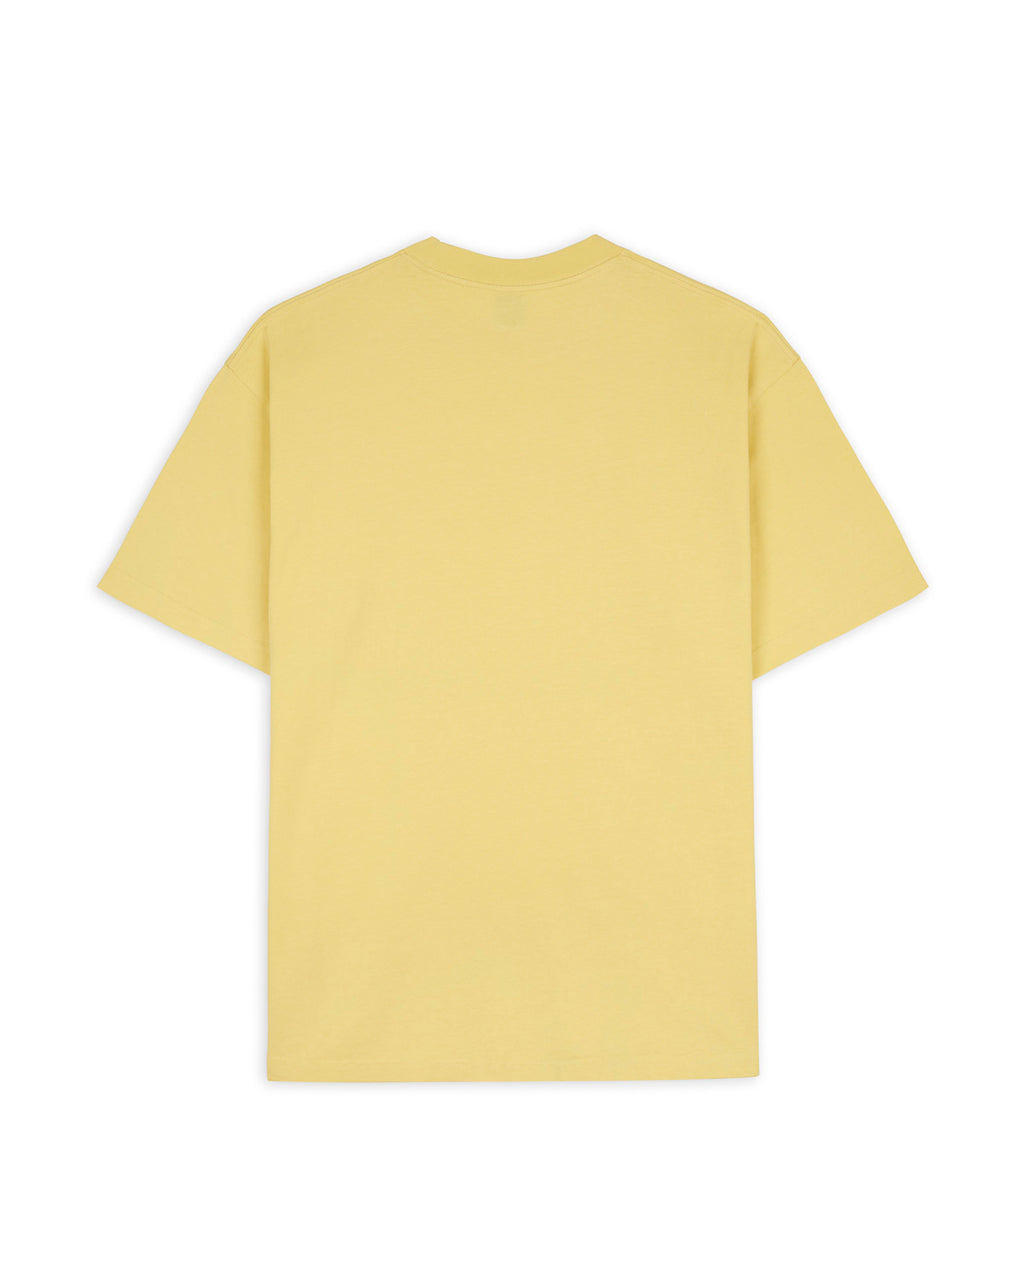 Calisthenics T-Shirt - Lemon 2